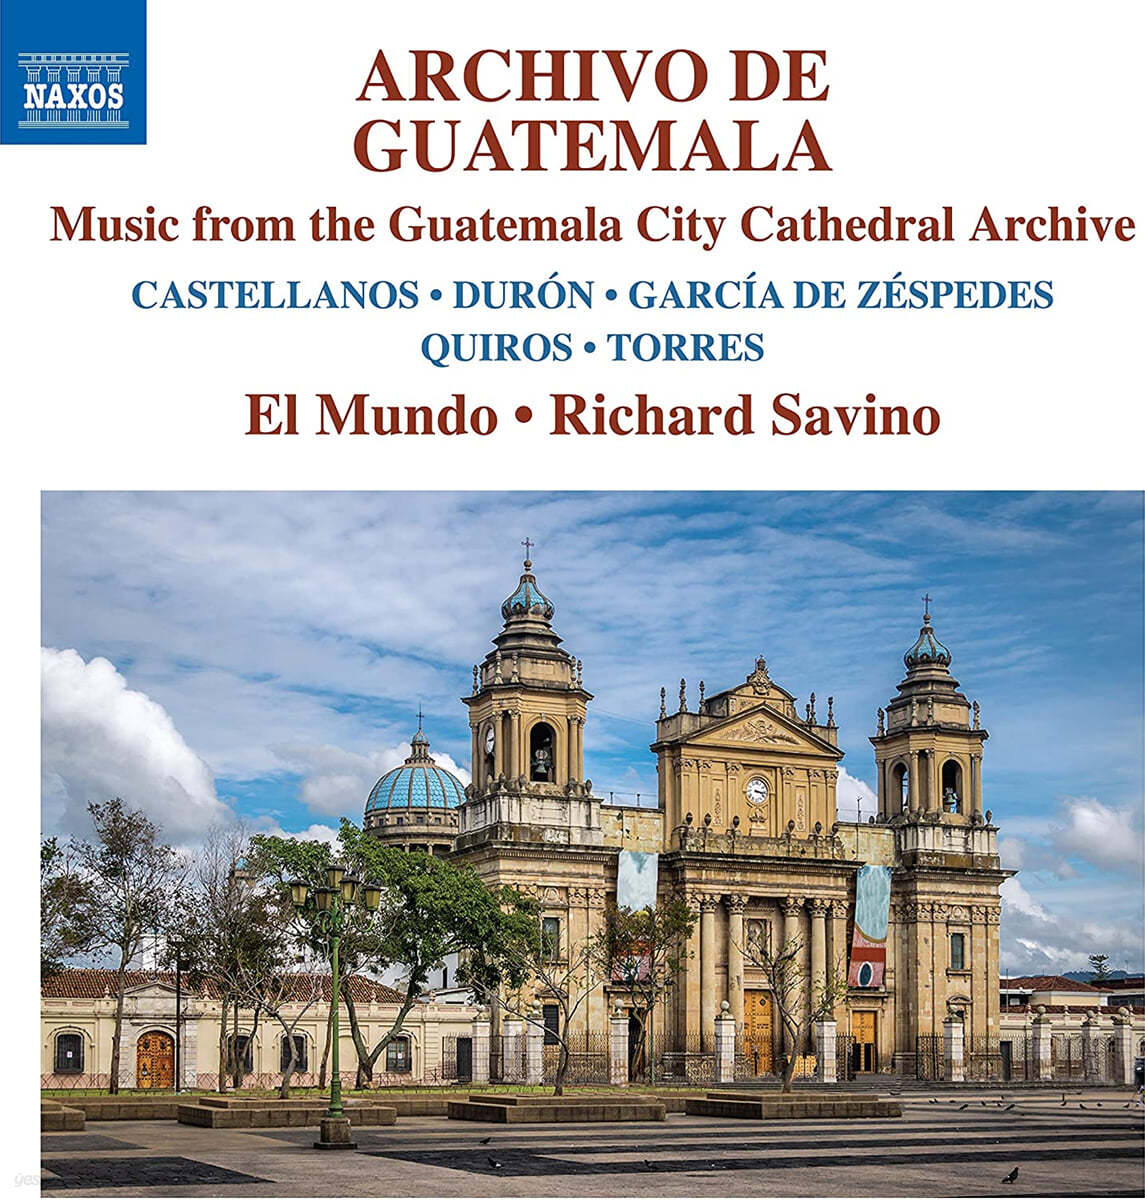 Richard Savino 과테말라 시티 성당 아카이브의 음악 작품집 (Archivo de Guatemala - Music from the Guatemala City Cathedral Archive) 